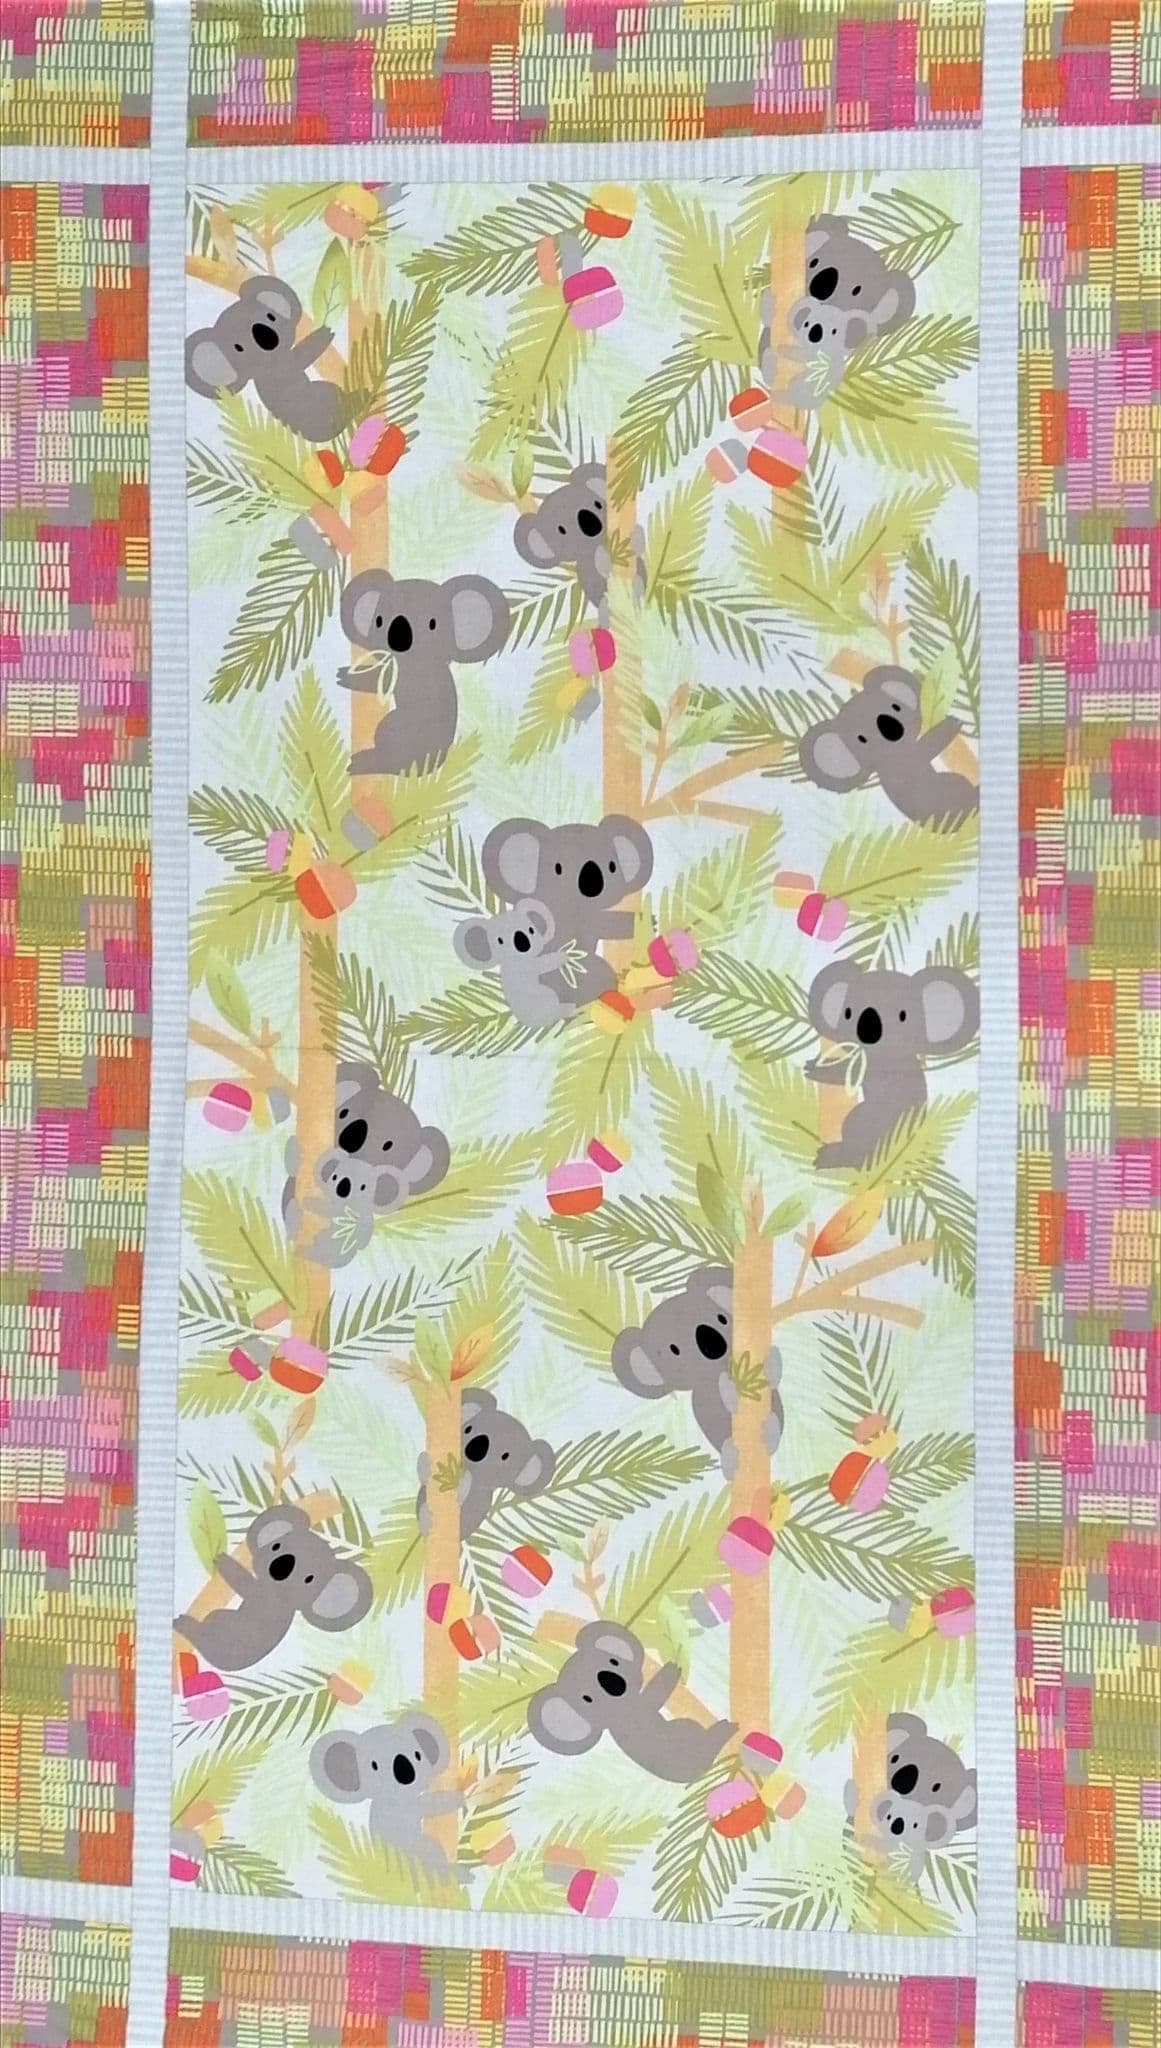 Kansas Studio - Koala Baby Cot Quilt Fabric Panel